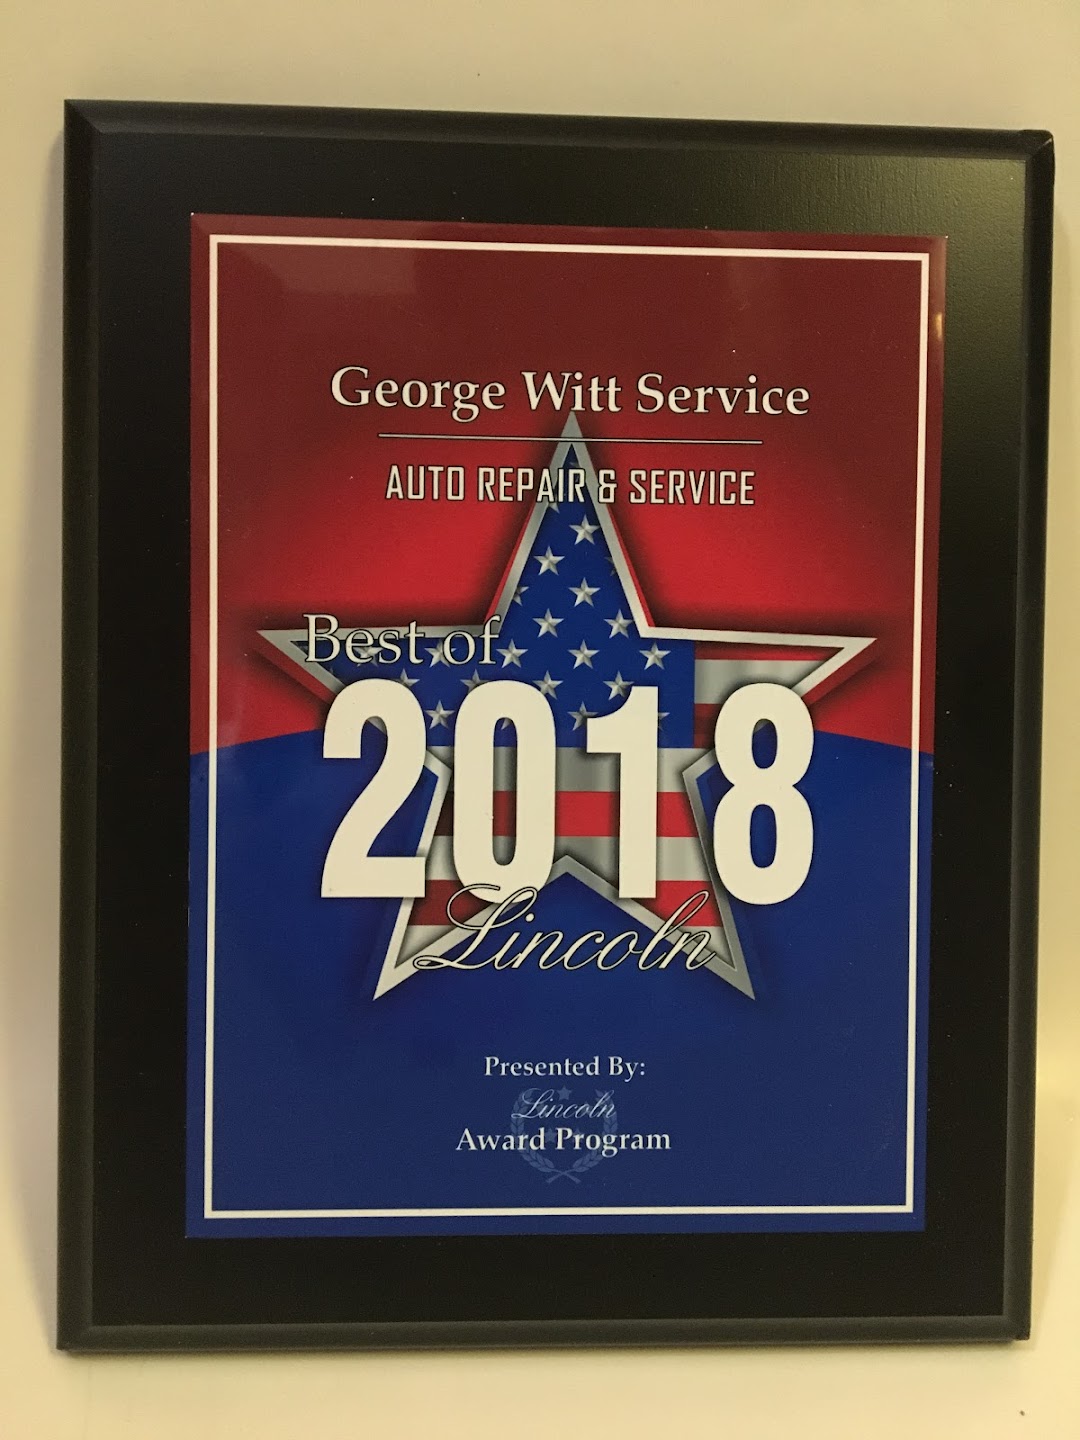 George Witt Service, Inc.